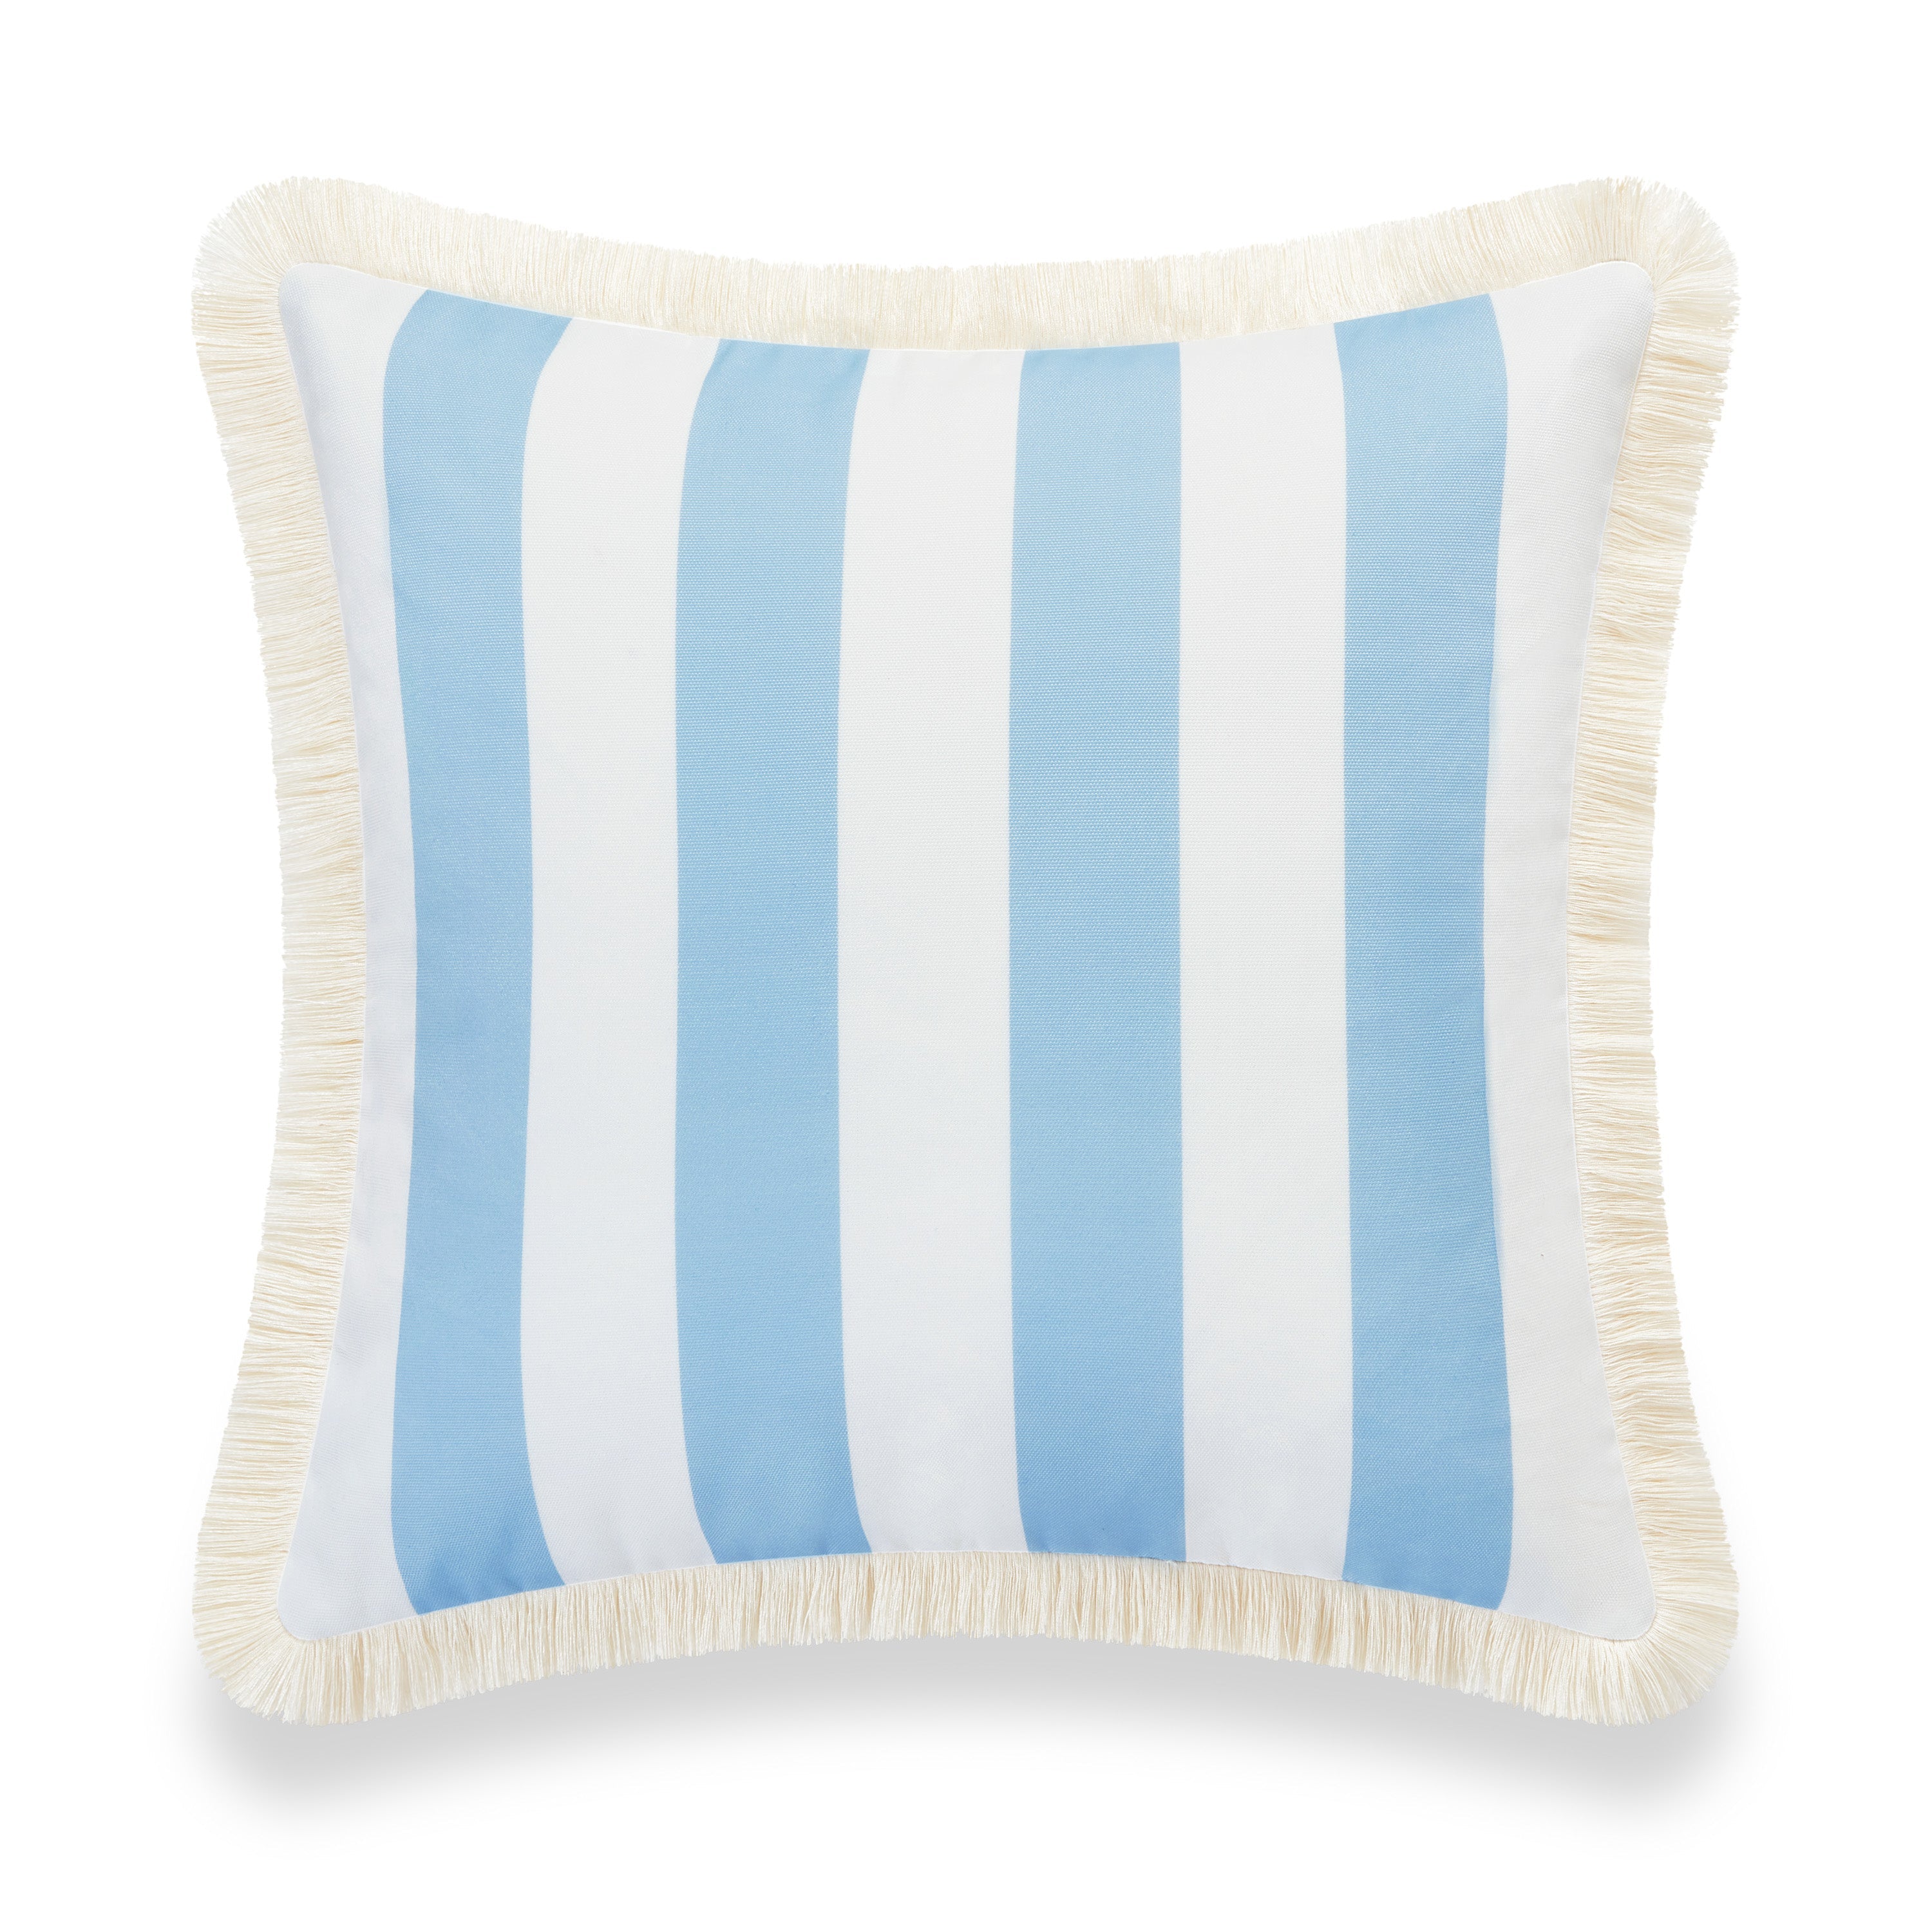 Coastal Hampton Style Indoor Outdoor Pillow Cover, Stripe Fringe, Baby Blue, 20"x20"